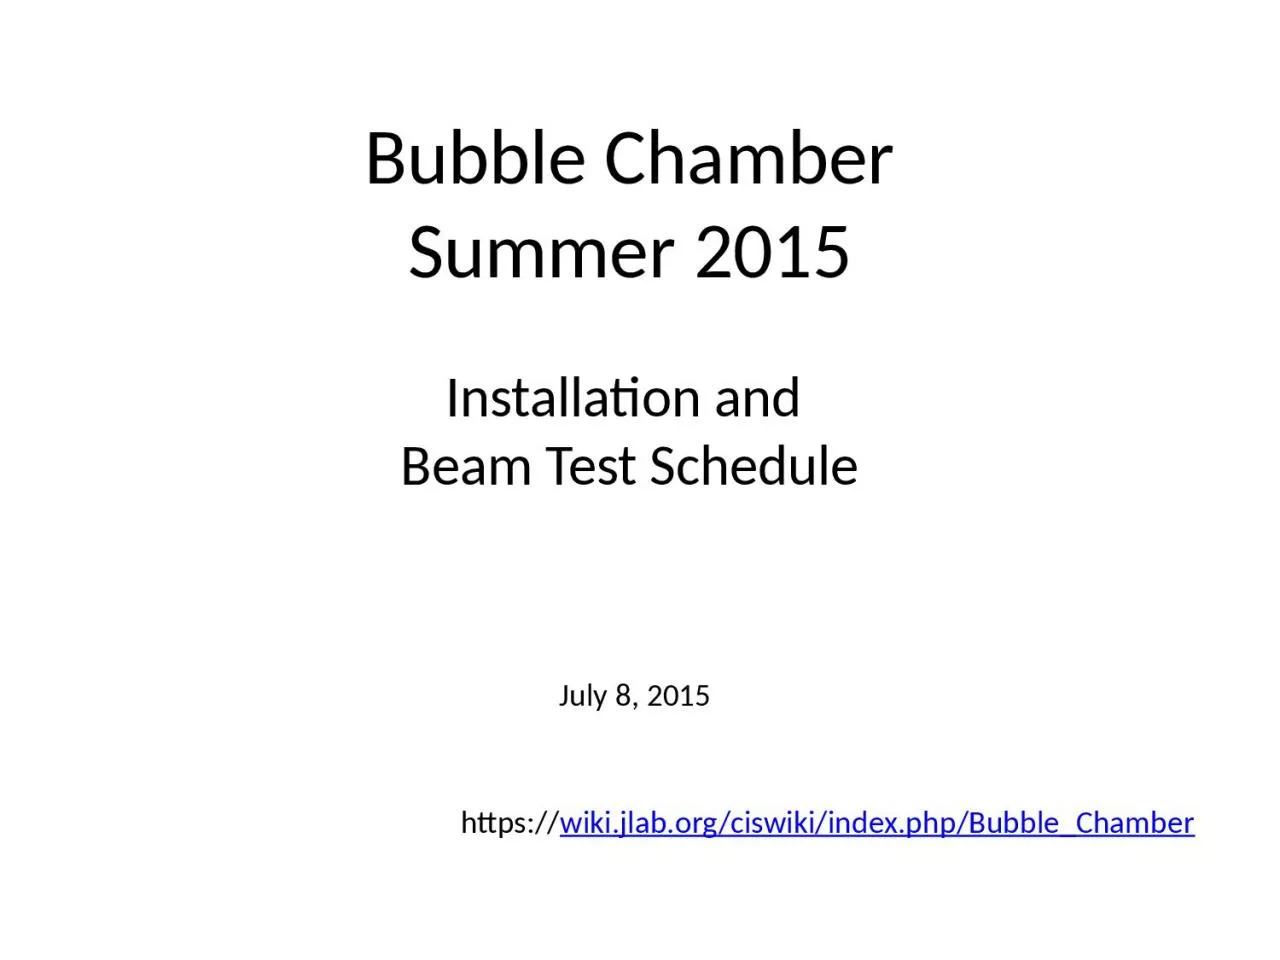 Bubble Chamber Summer 2015